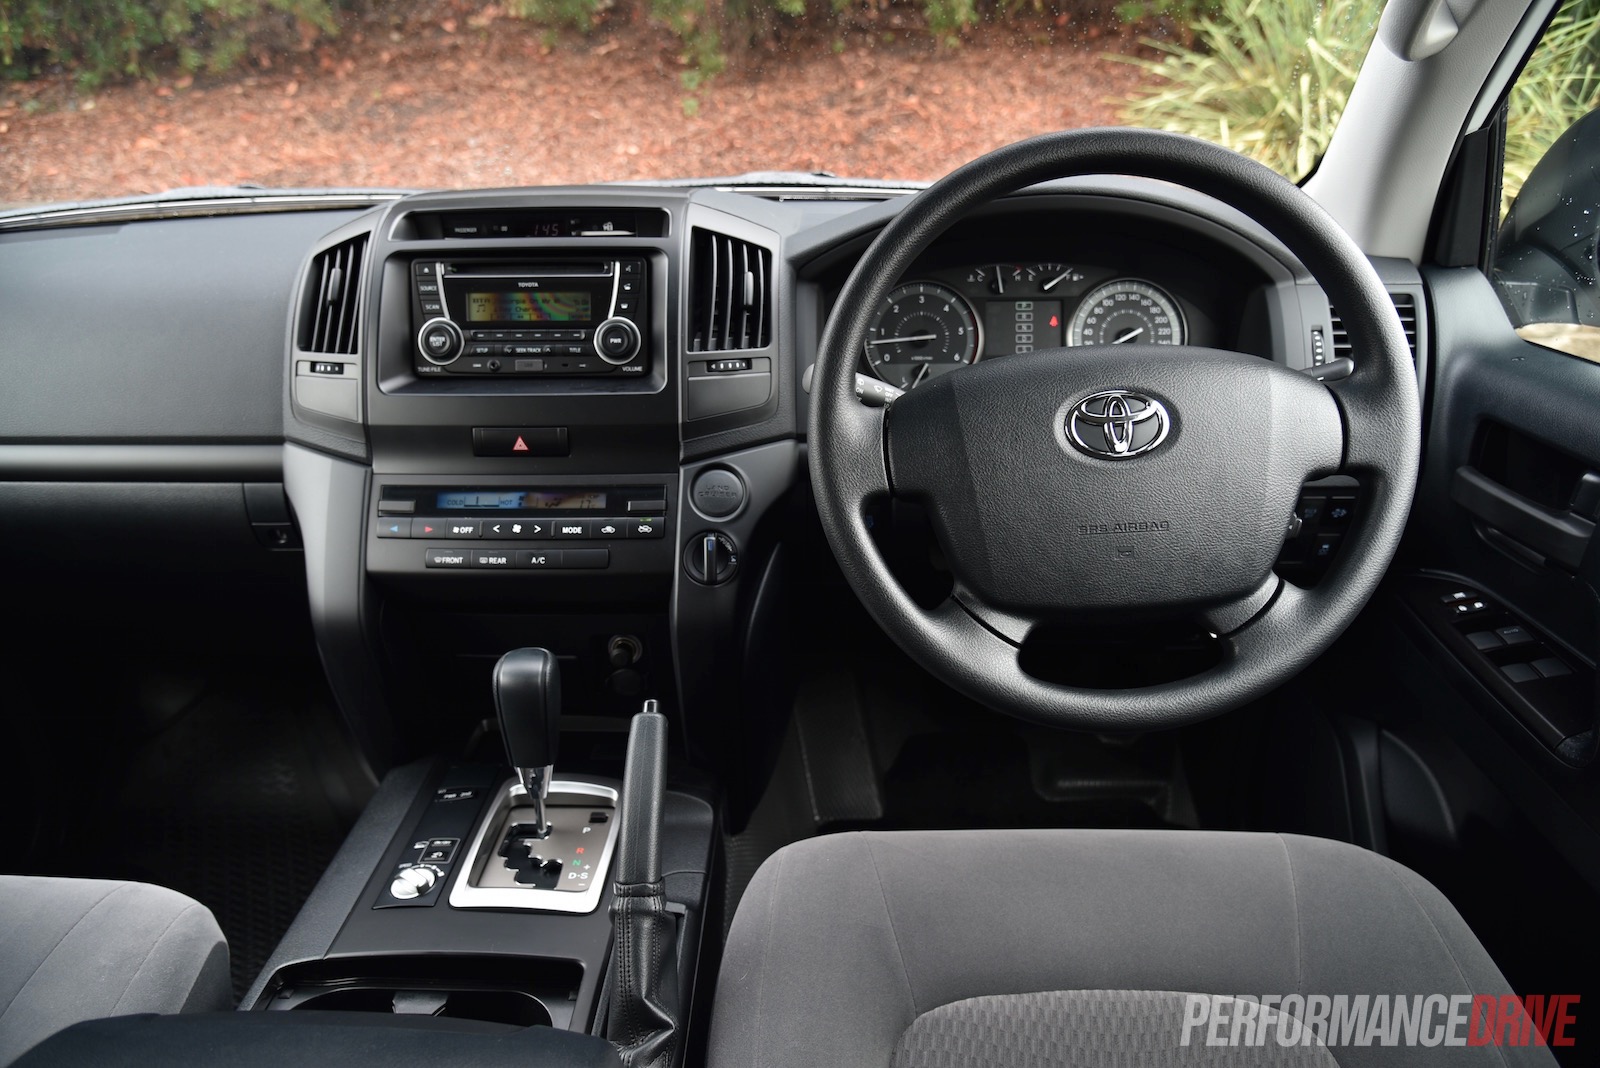 2016 Toyota Landcruiser Gx Review Video Performancedrive